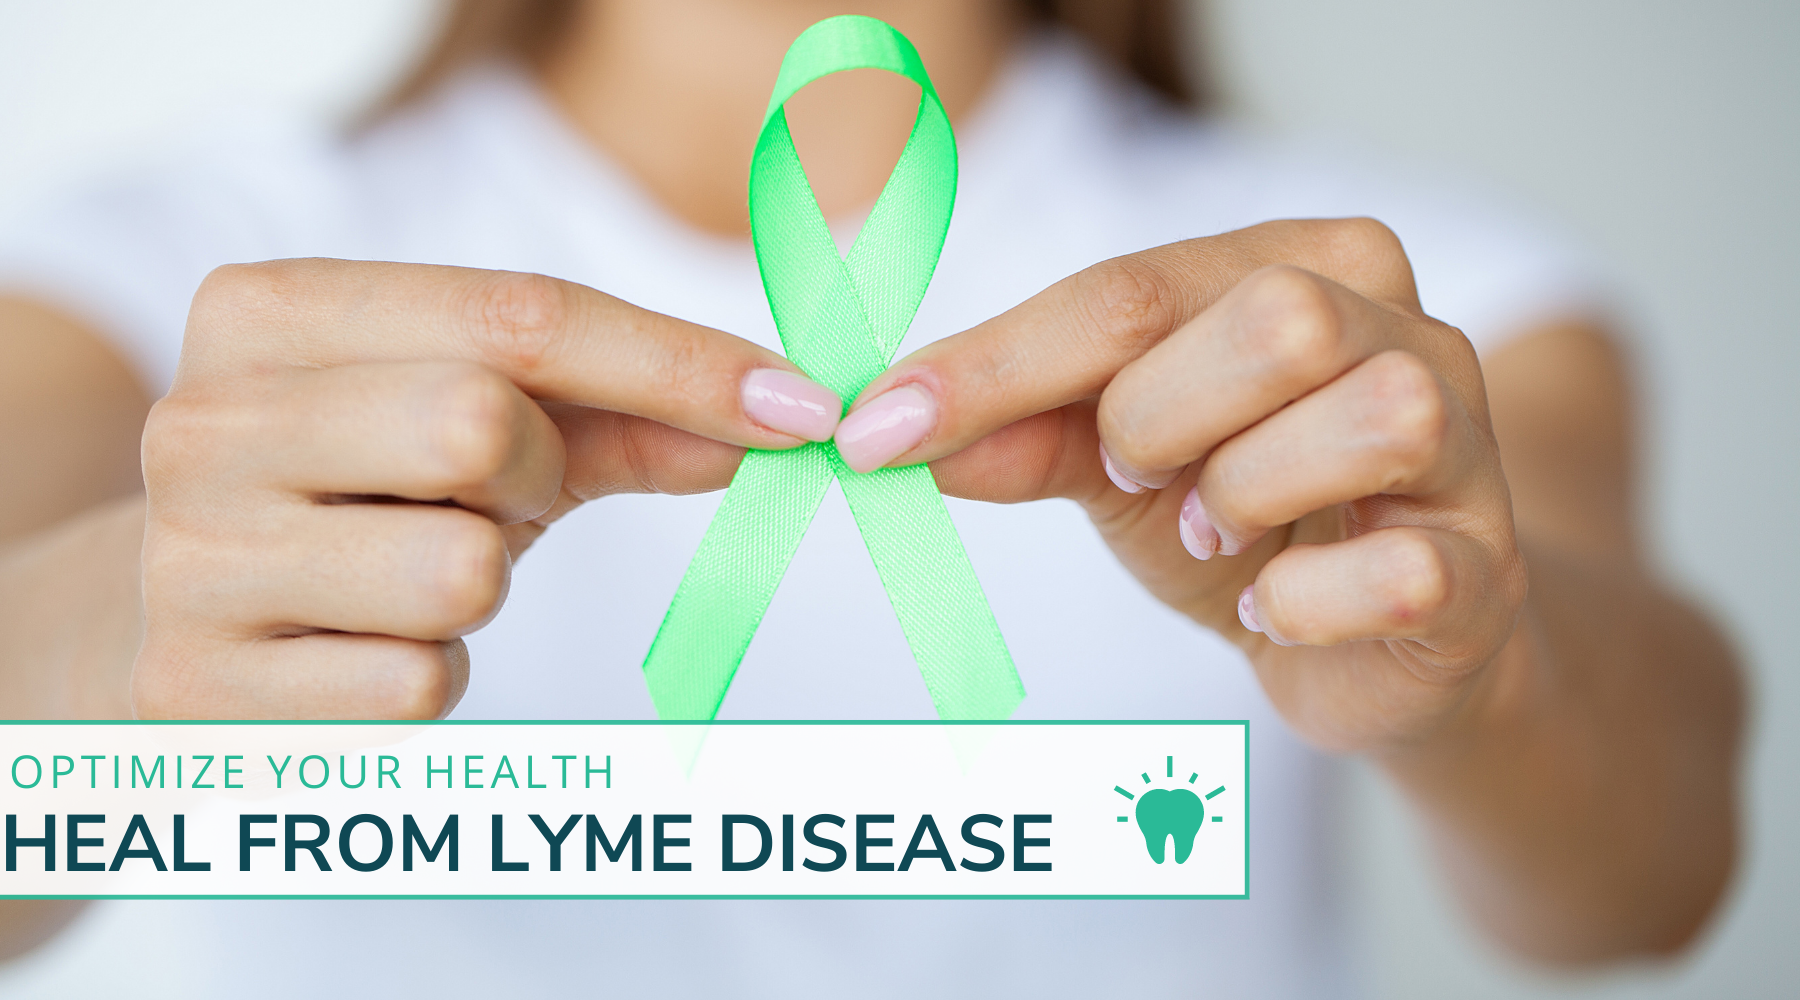 Lime green Lyme Disease Awareness Ribbon to promote Summit